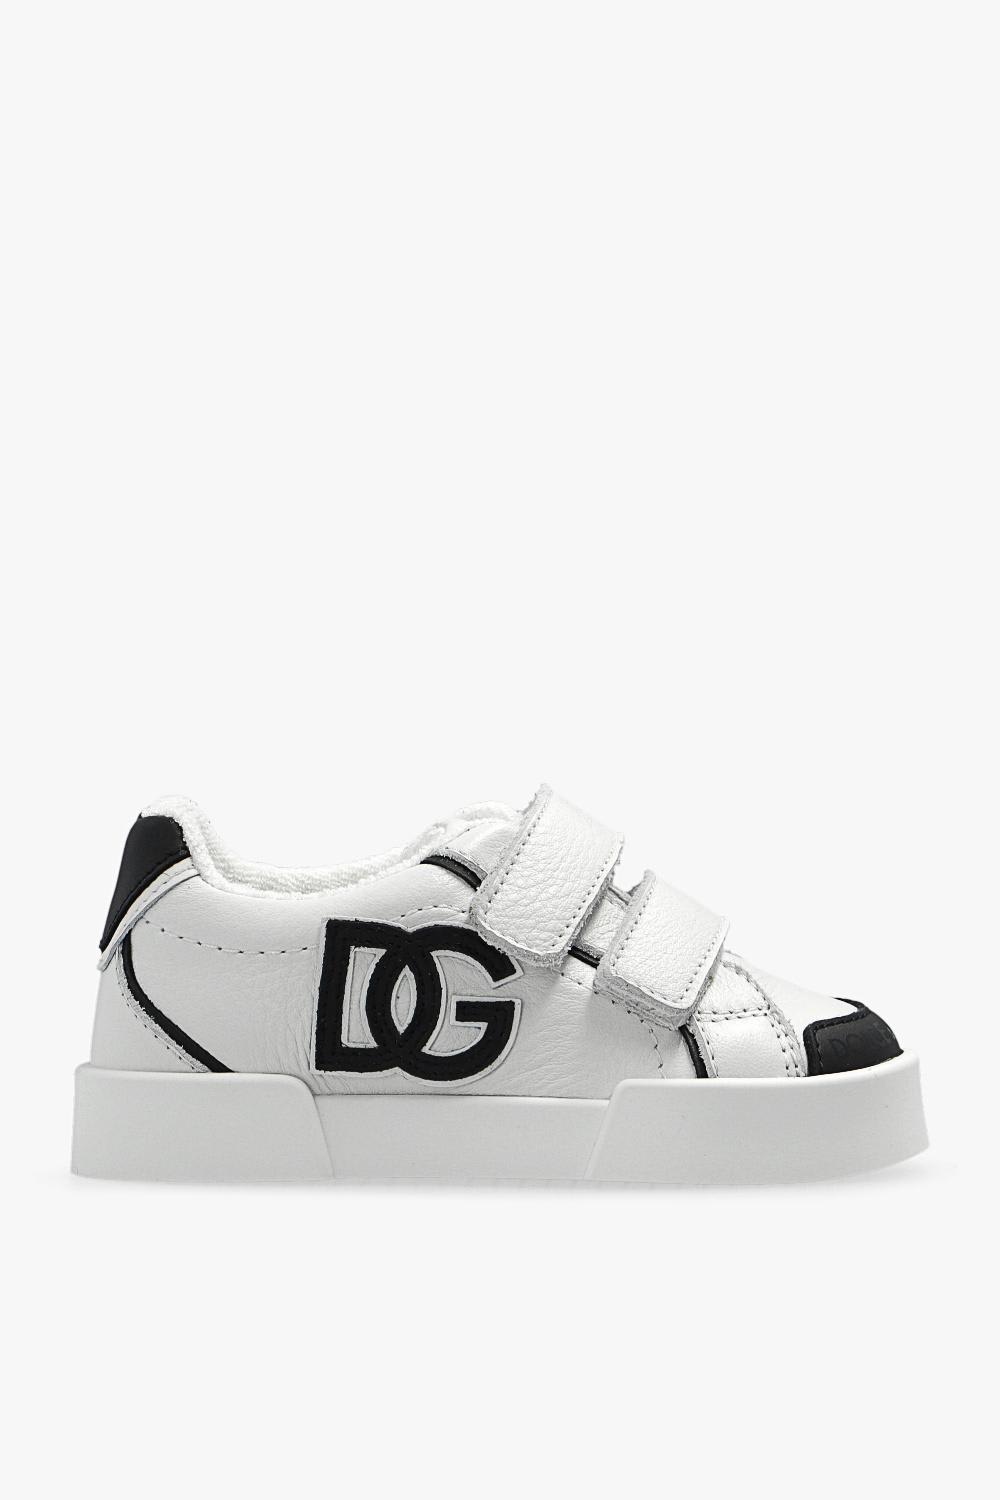 Dolce & Gabbana Kids portofino Light Sneakers